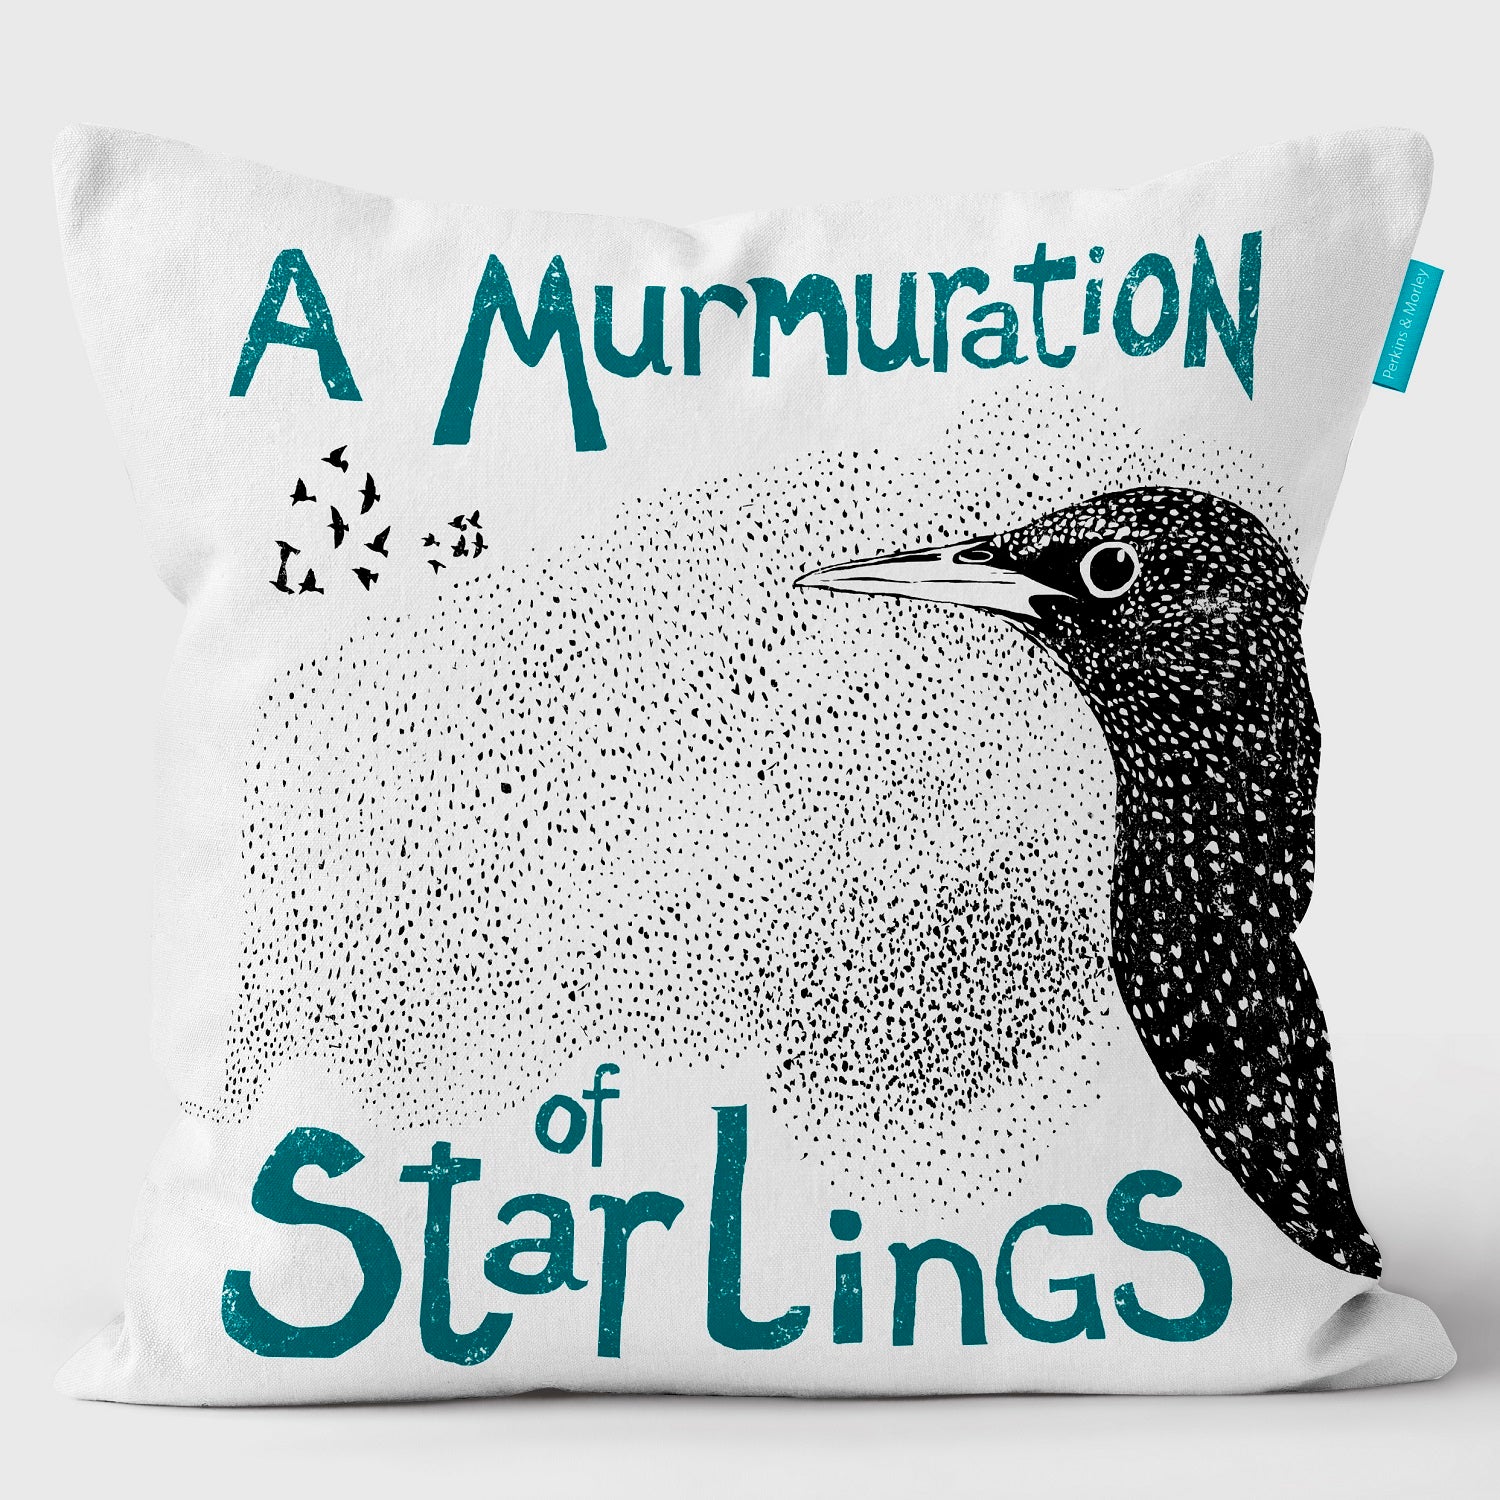 Murmuration of Starlings - Collective Noun Cushion